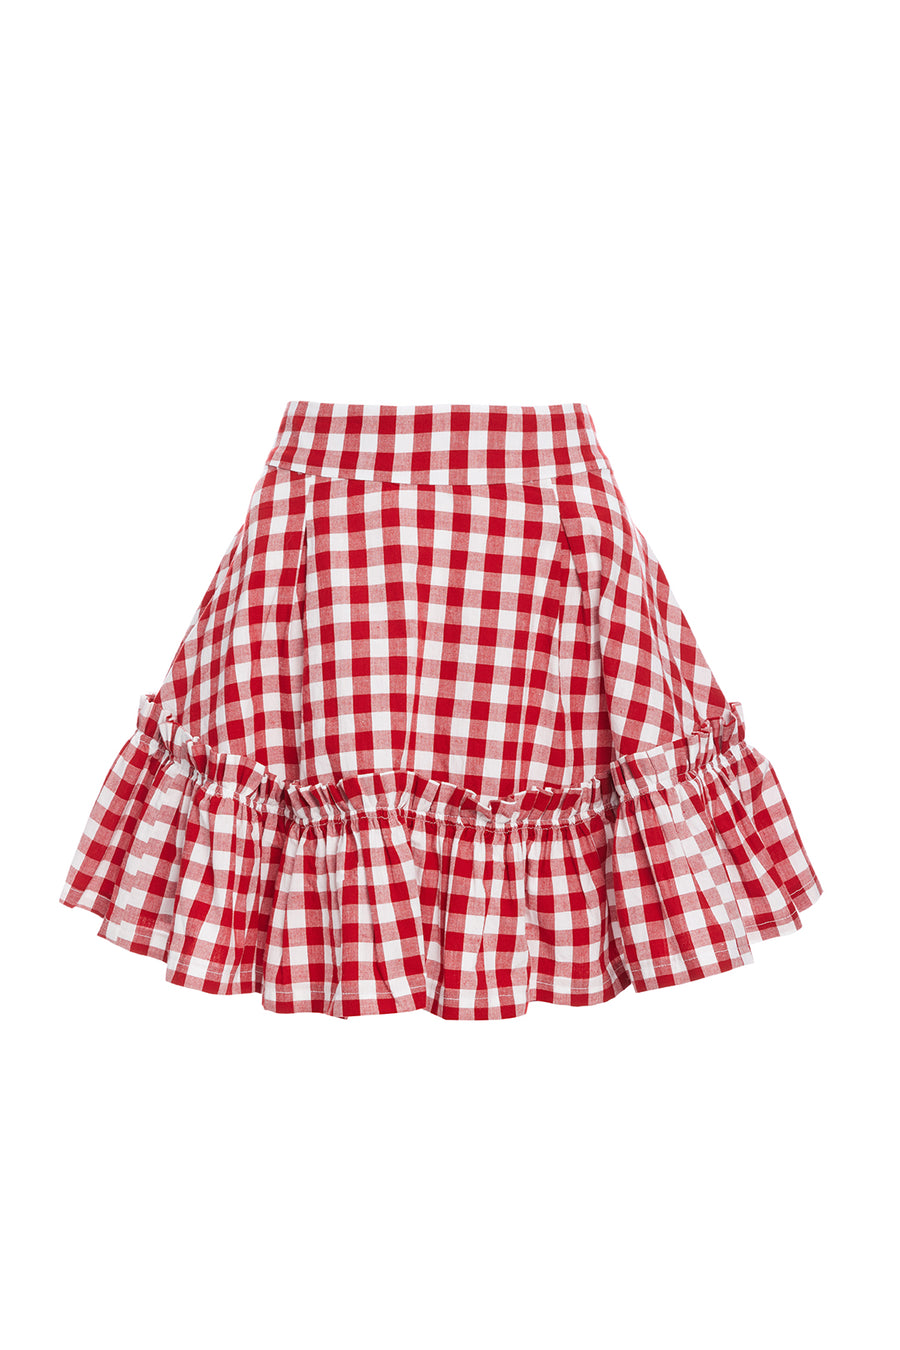 Quinoa Skirt